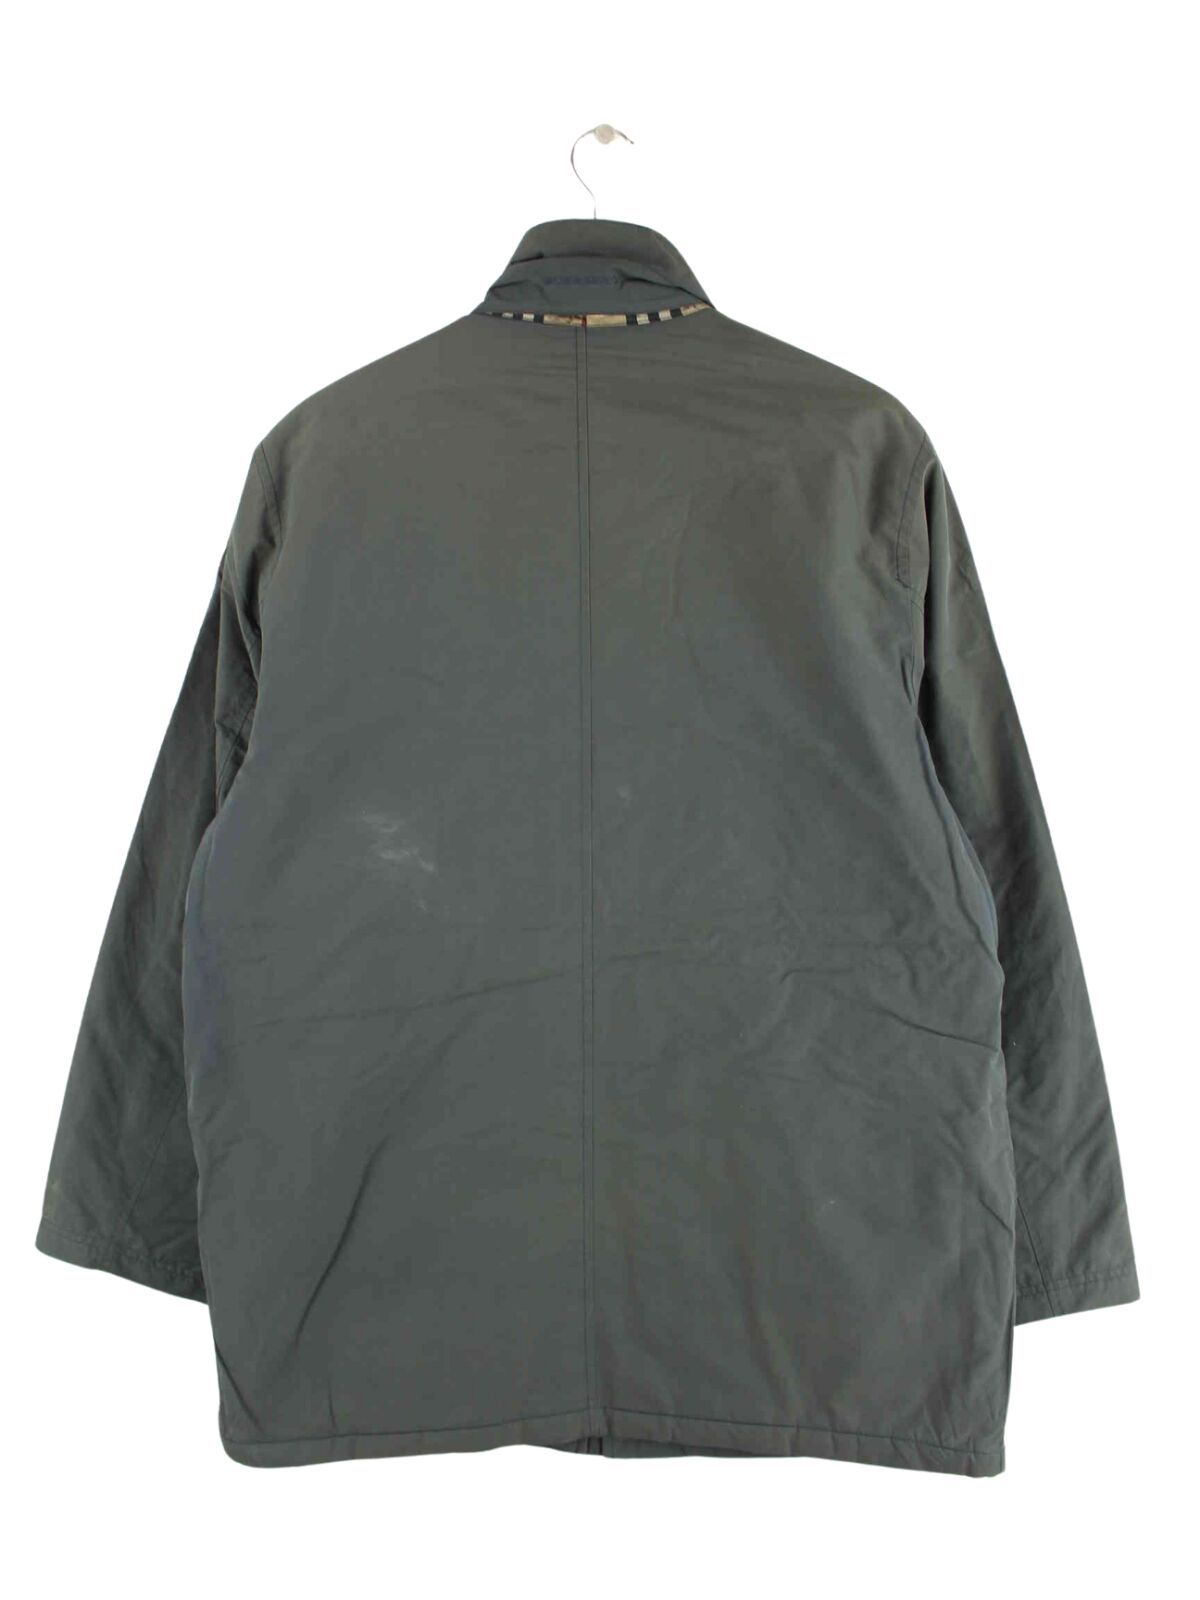 Burberry Nova Check Jacke Grau XL (back image)